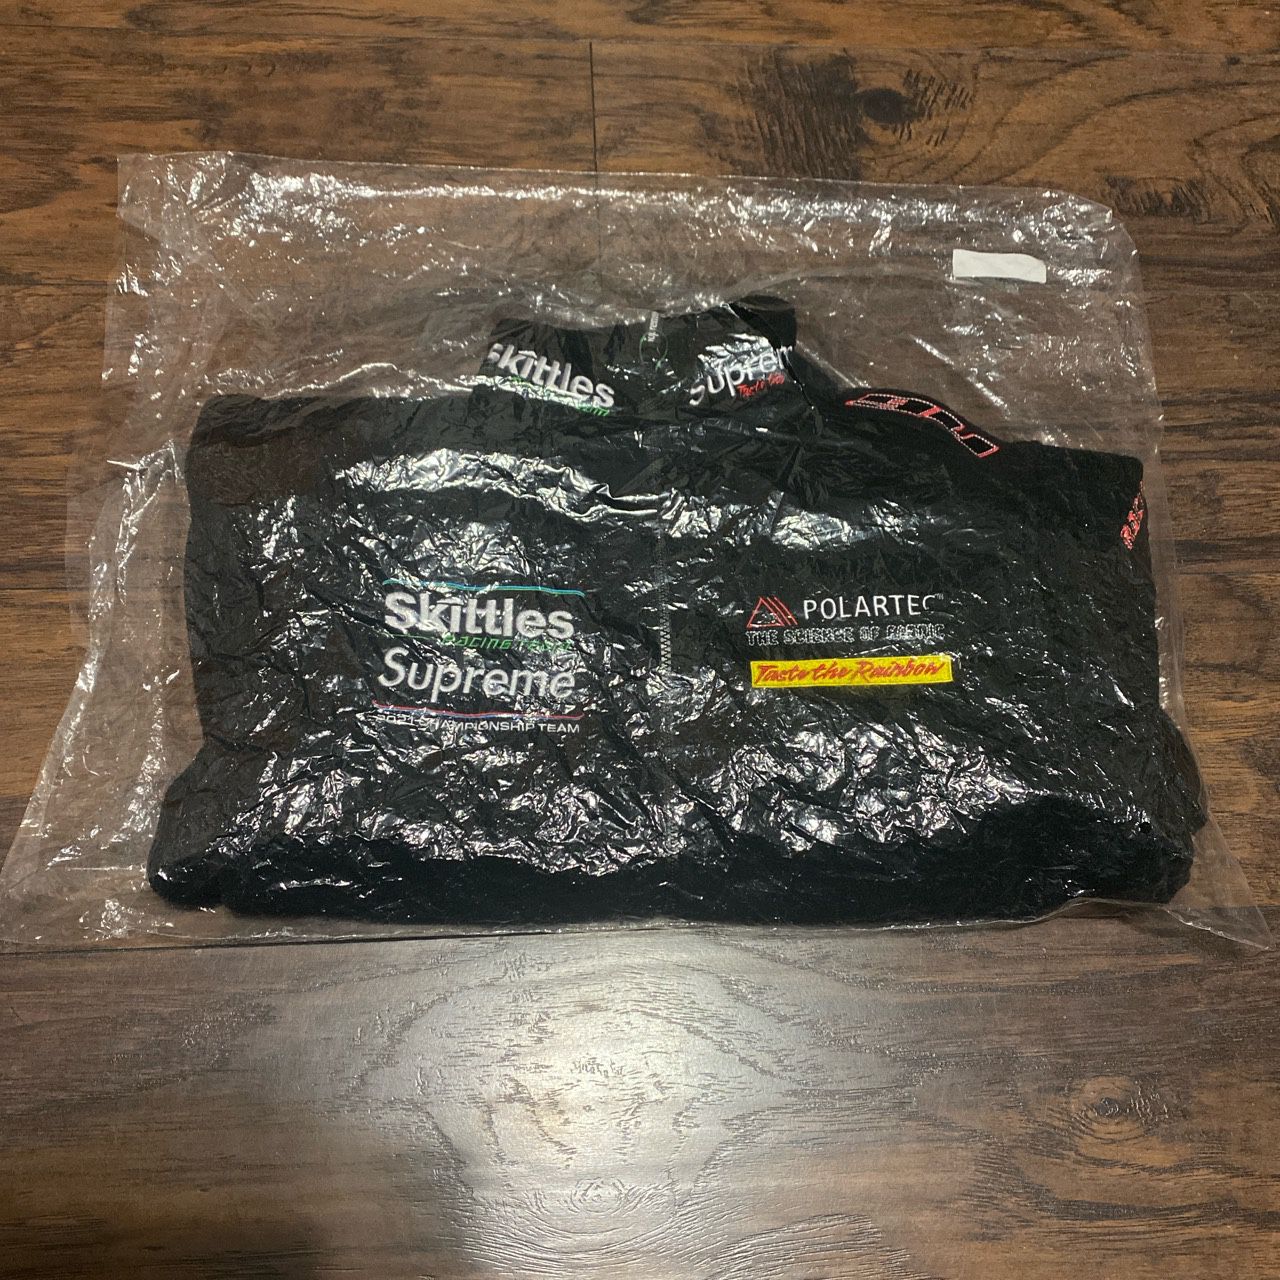 Supreme Skittles Polartec Jacket for Sale in Edwardsville, PA - OfferUp